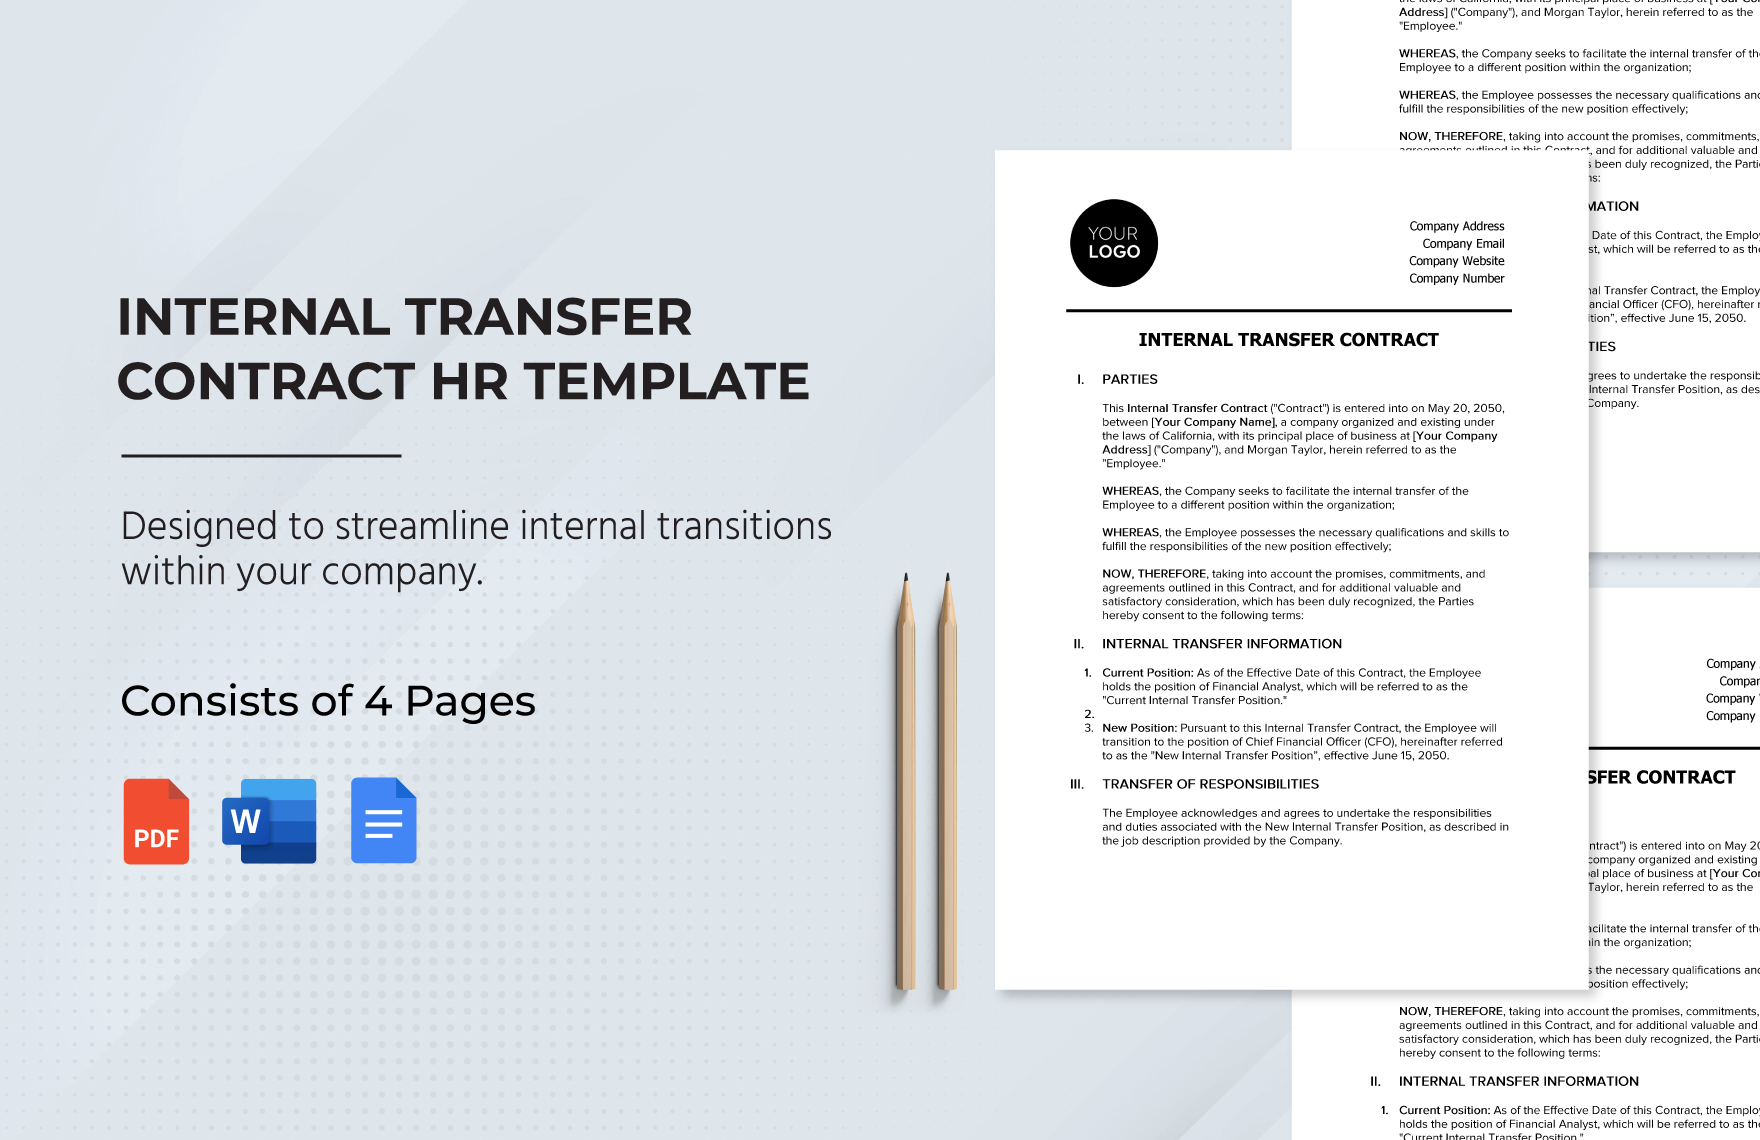 Internal Transfer Contract HR Template